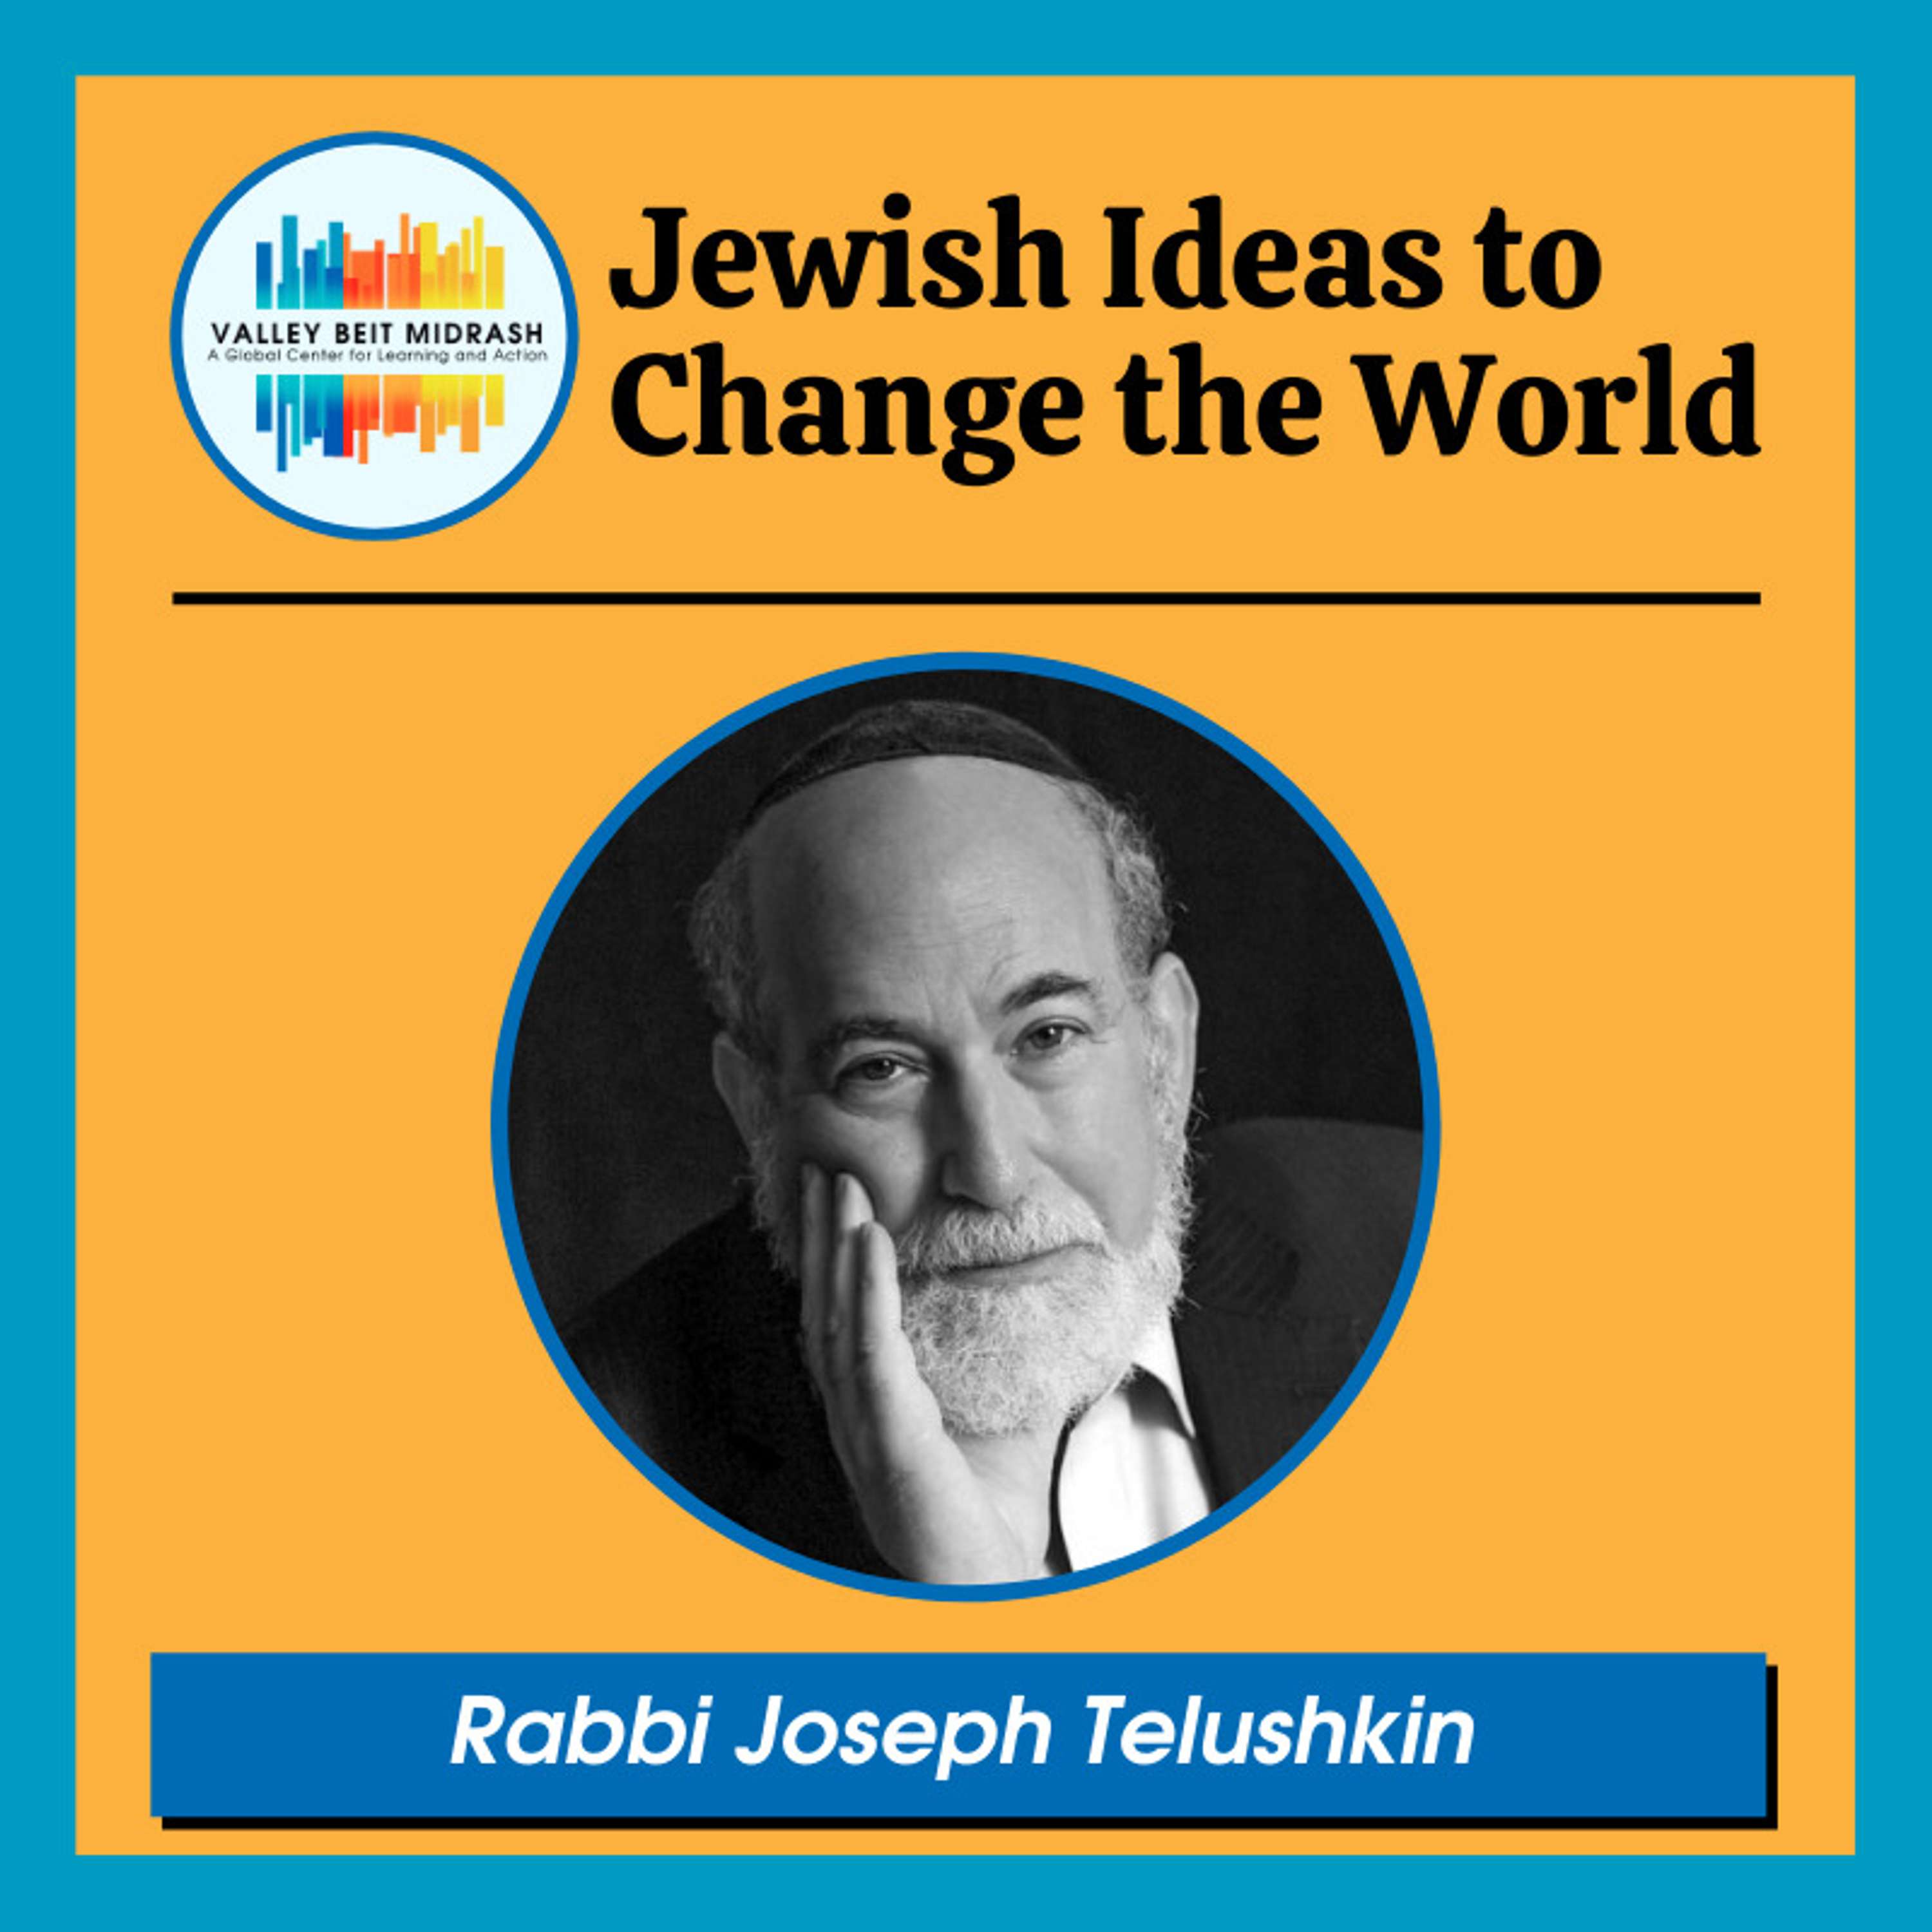 Rabbi Joseph Telushkin – The Twenty-First Century: A Jewish Vision, One Day At A Time